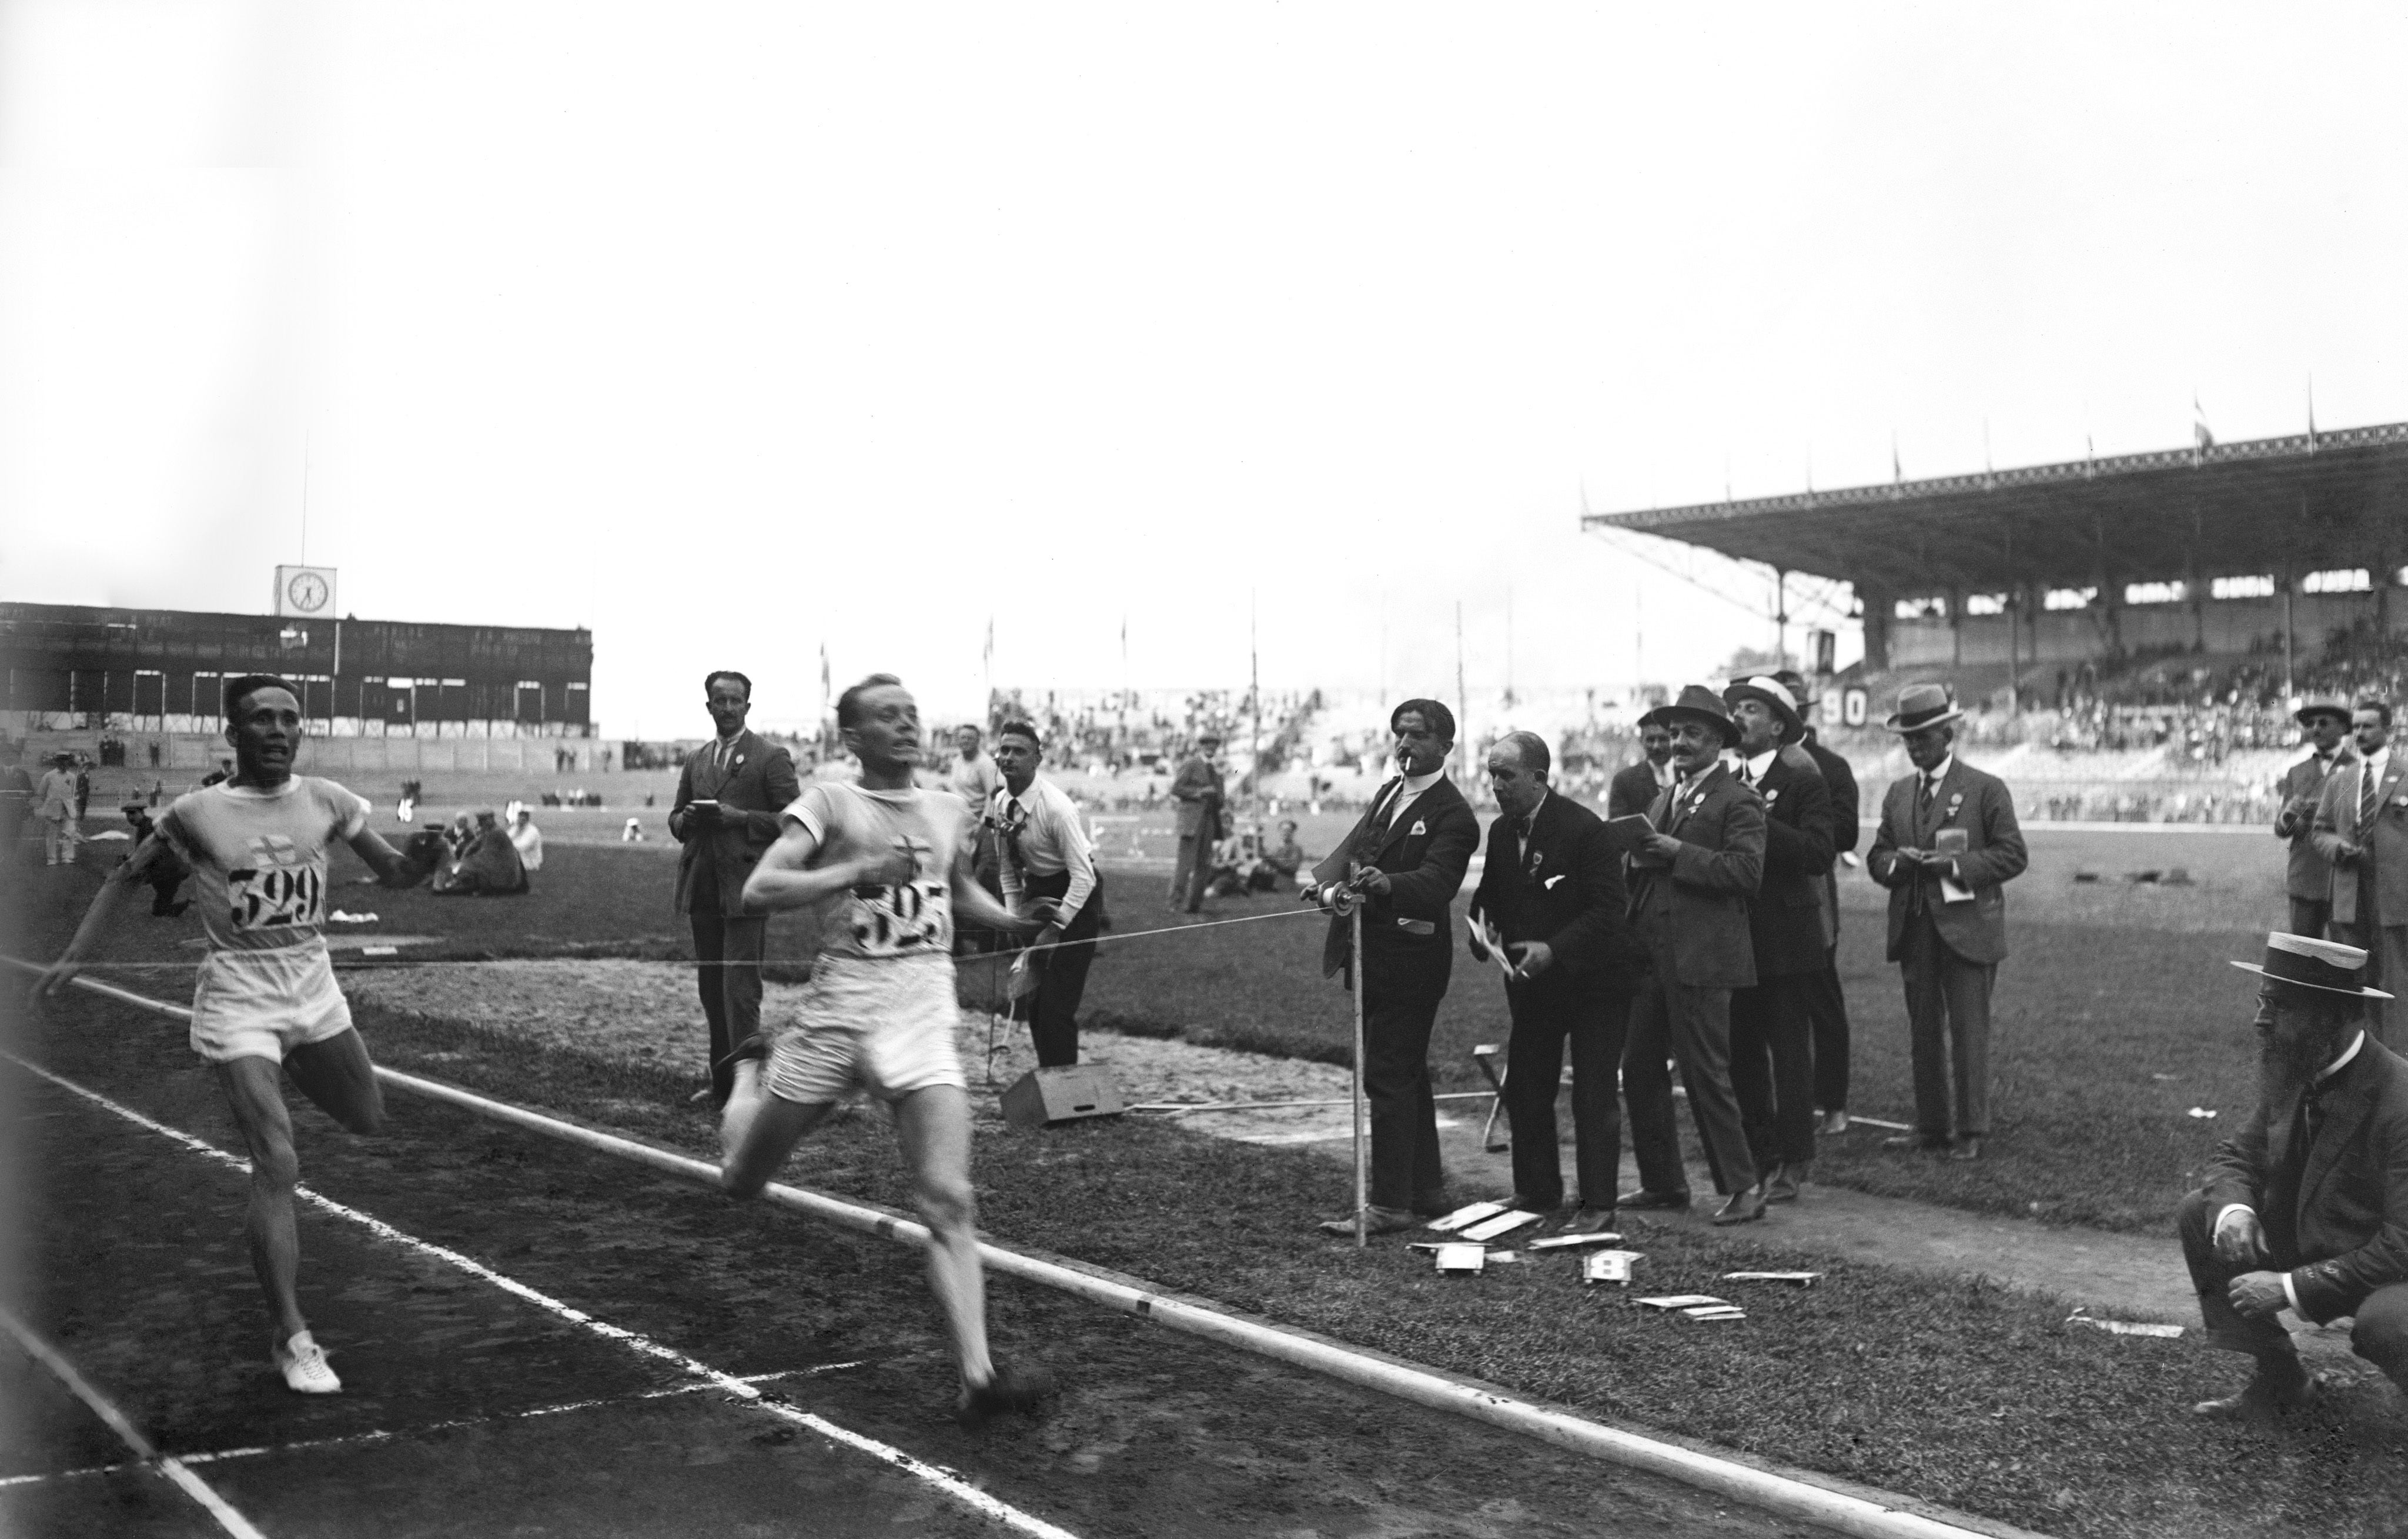 Paavo Nurmi of Finland winning the 5,000 metres